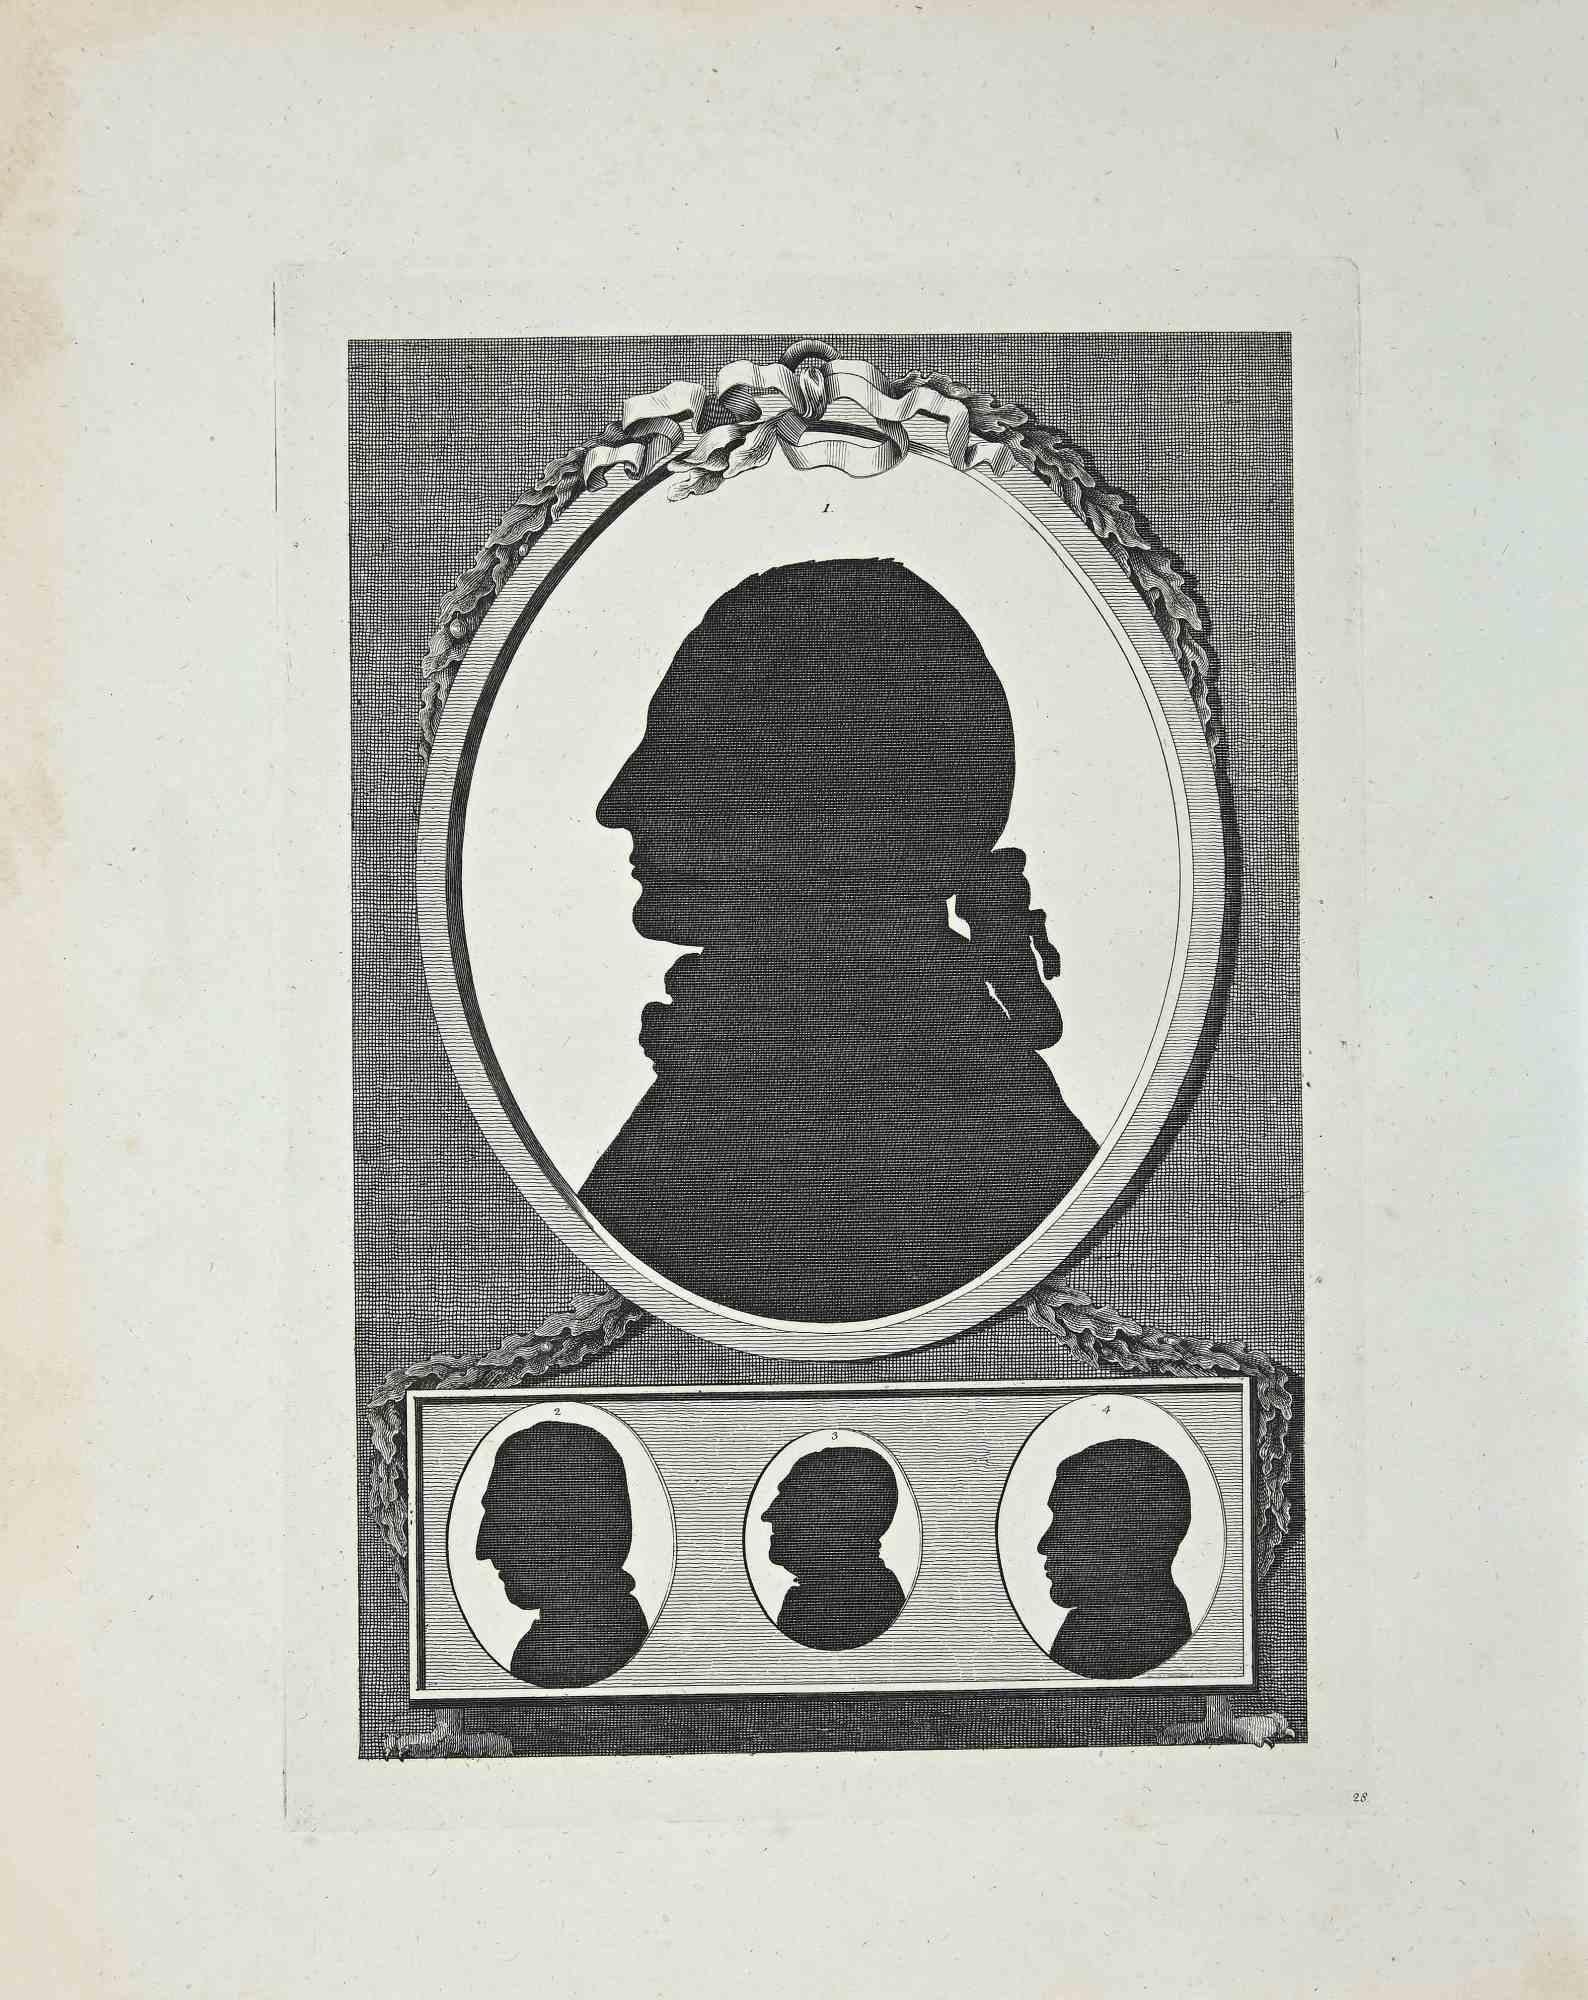 18th century silhouettes